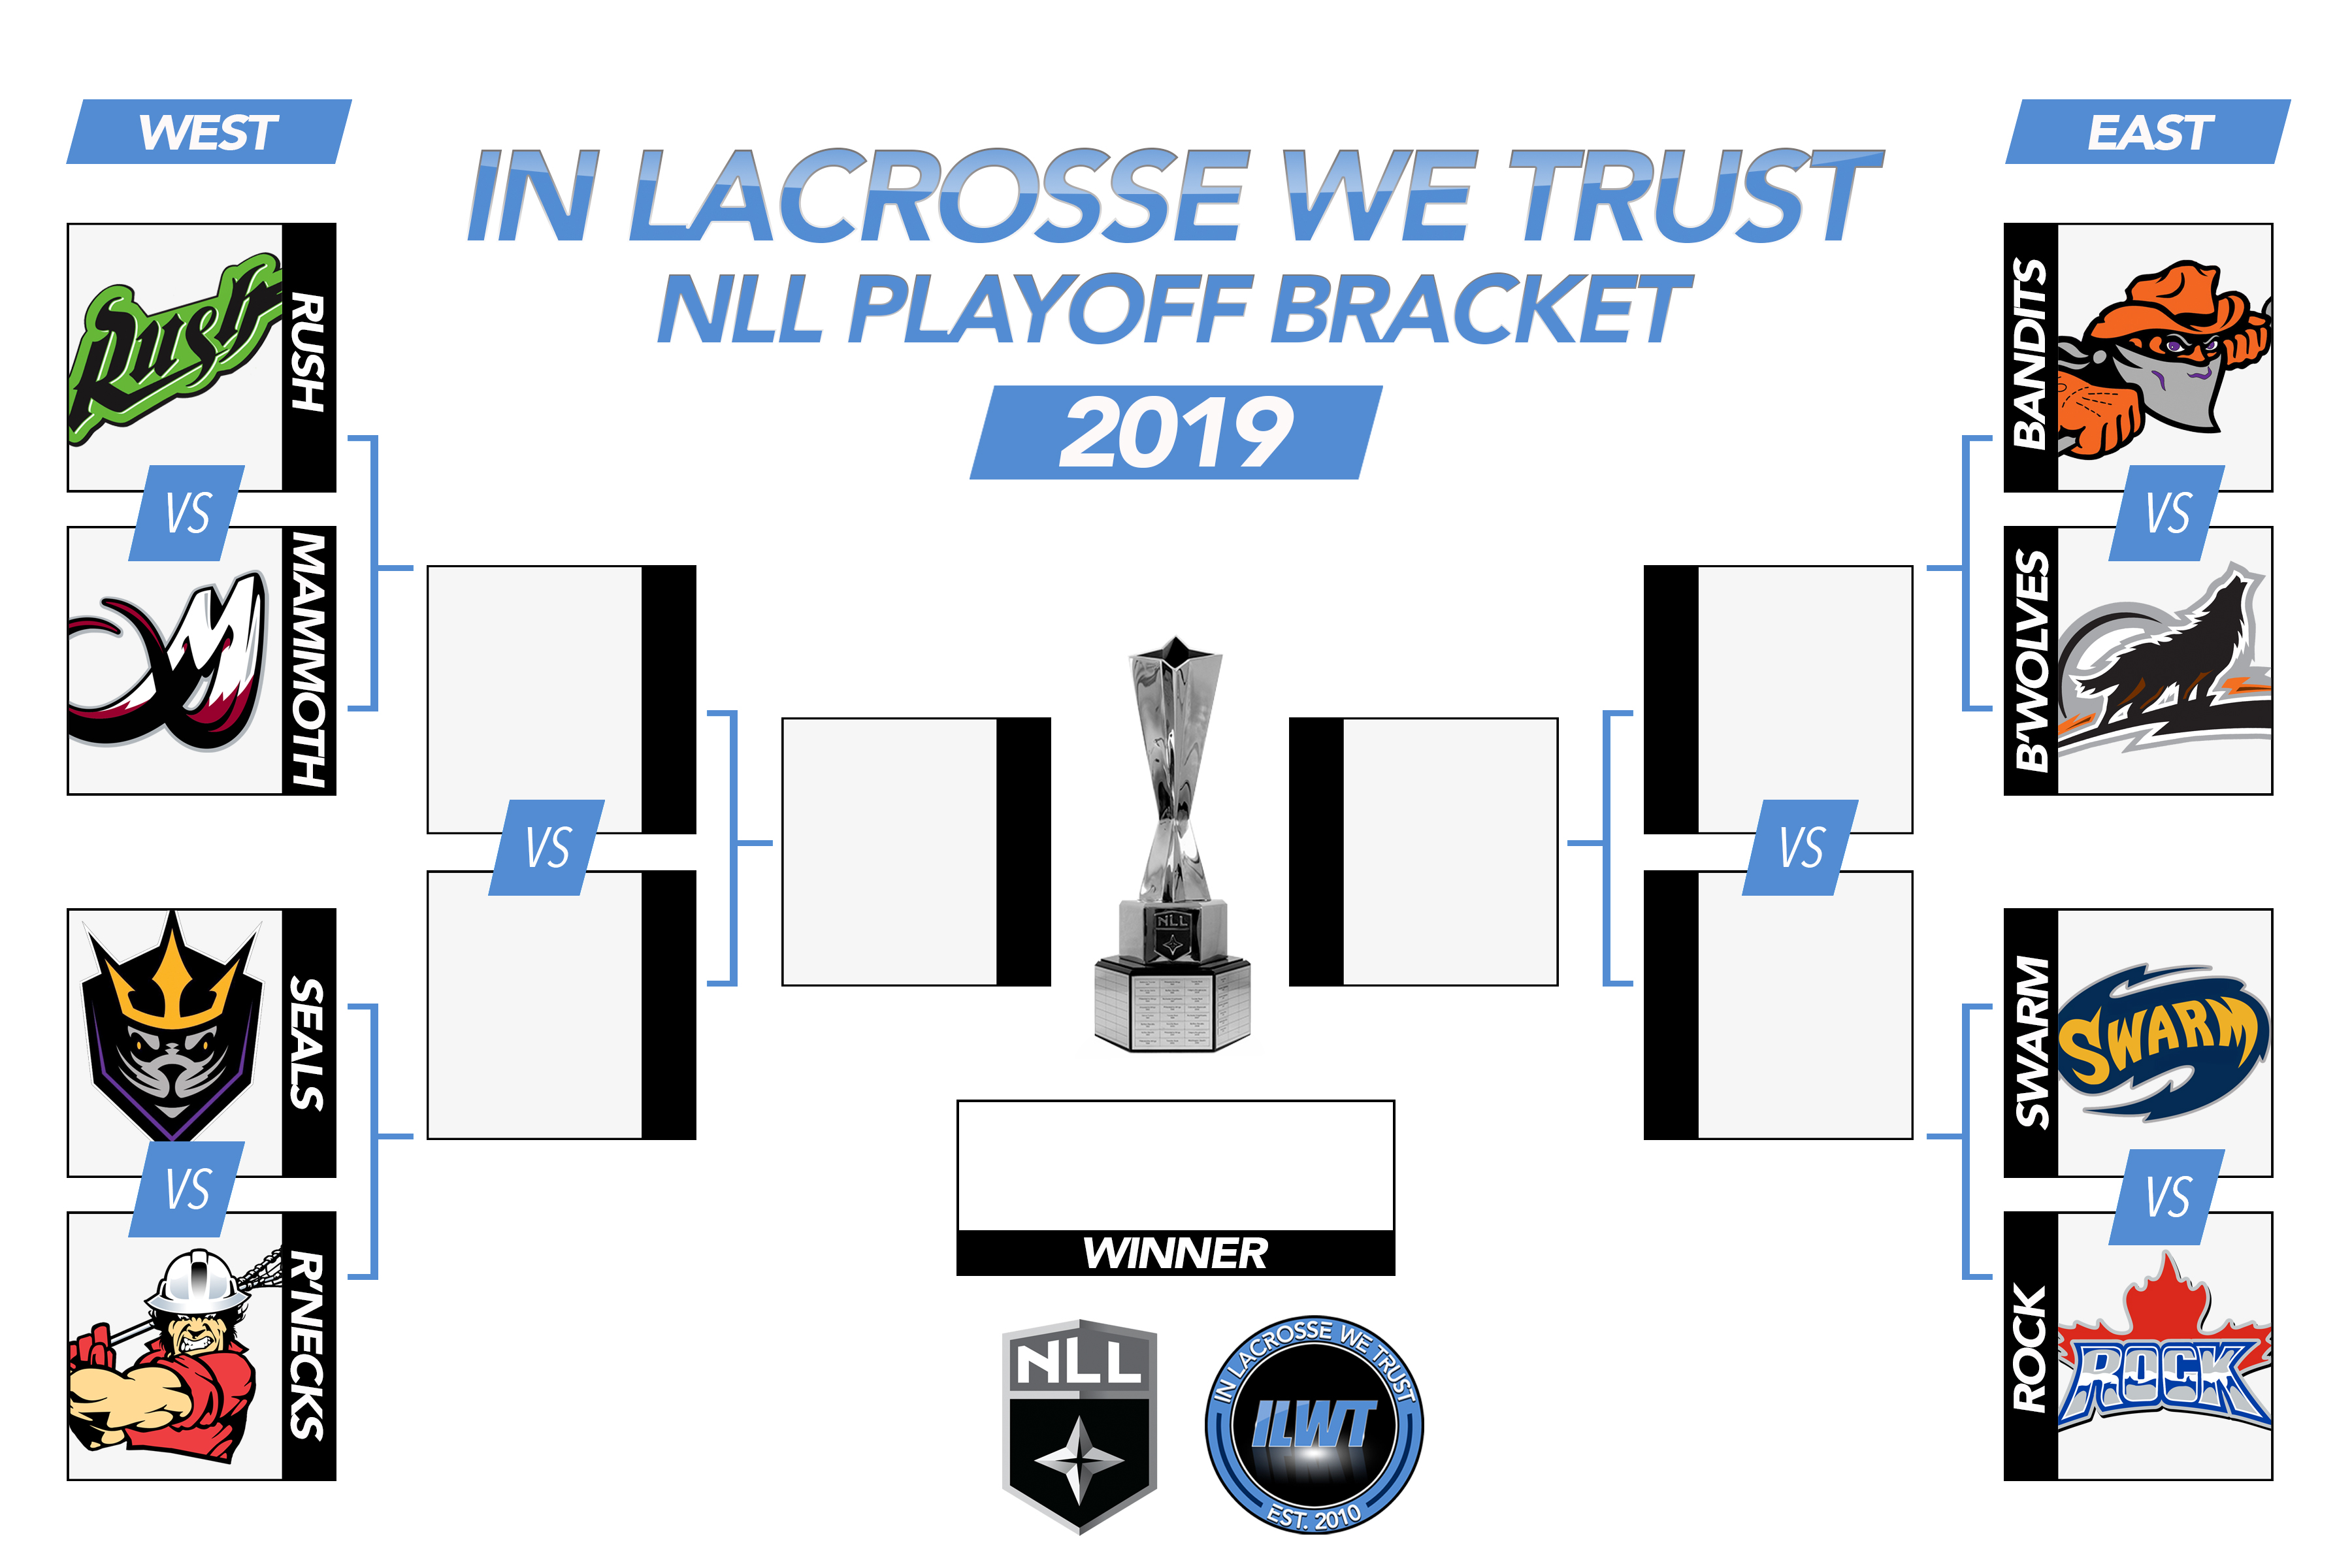 NLL Playoff Bracket 2019 In Lacrosse We Trust